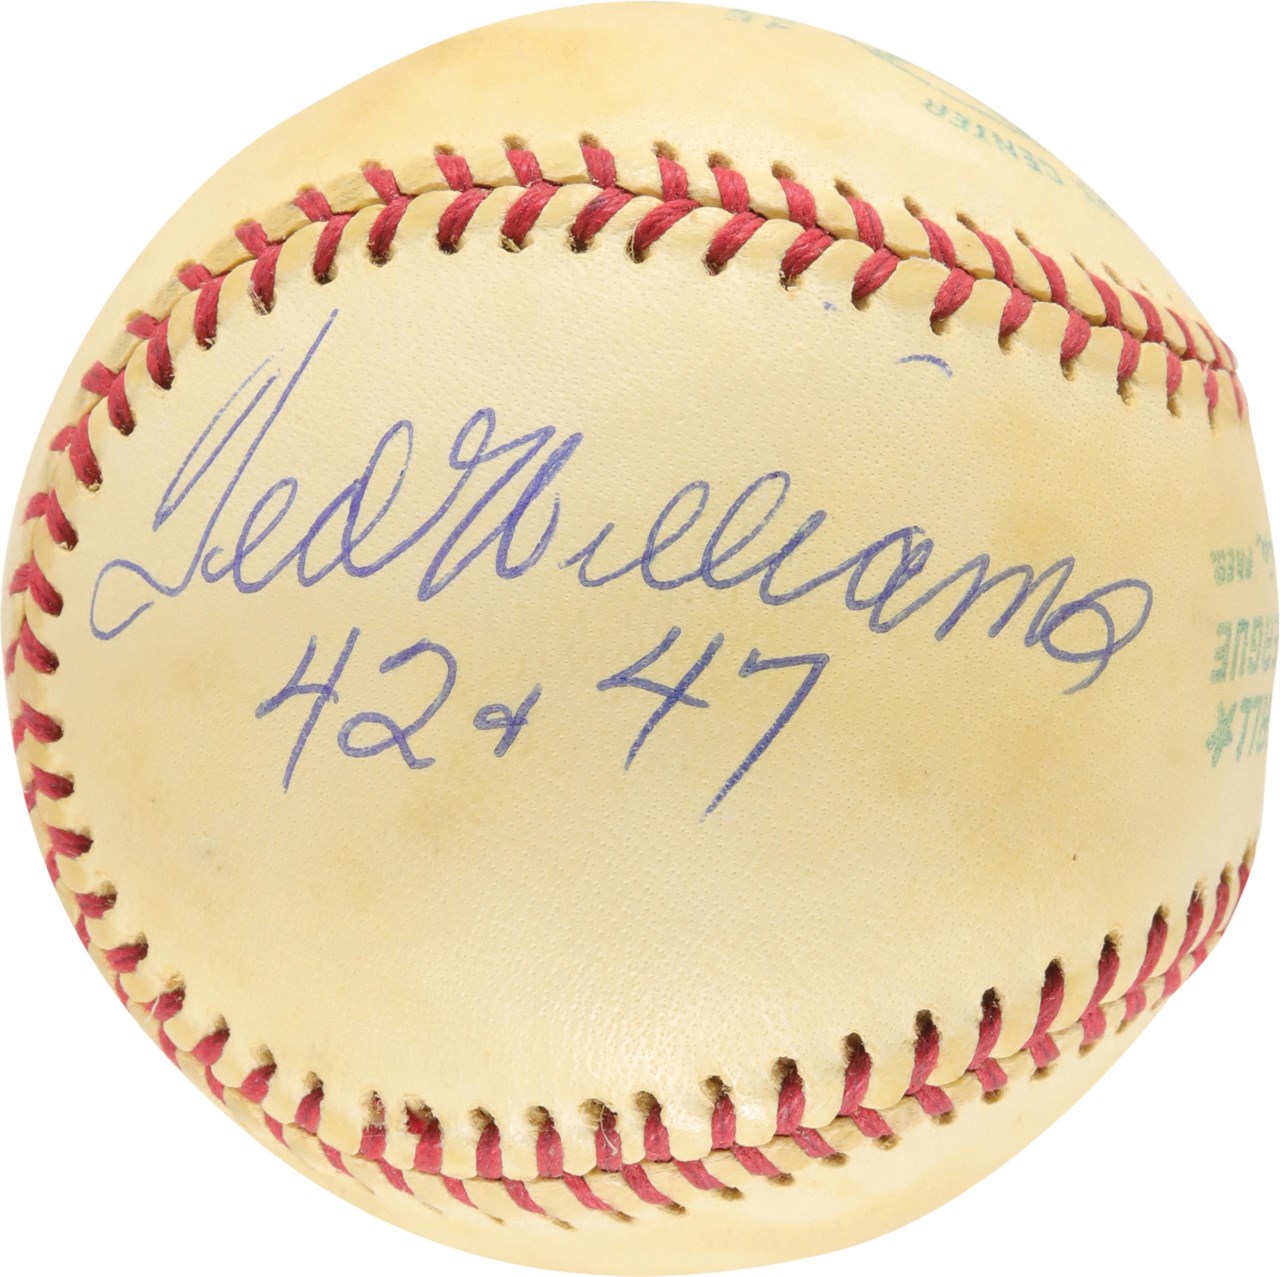 Baseball Autographs - Ted Williams Triple Crown "42 & 47" Single Signed Baseball (JSA)